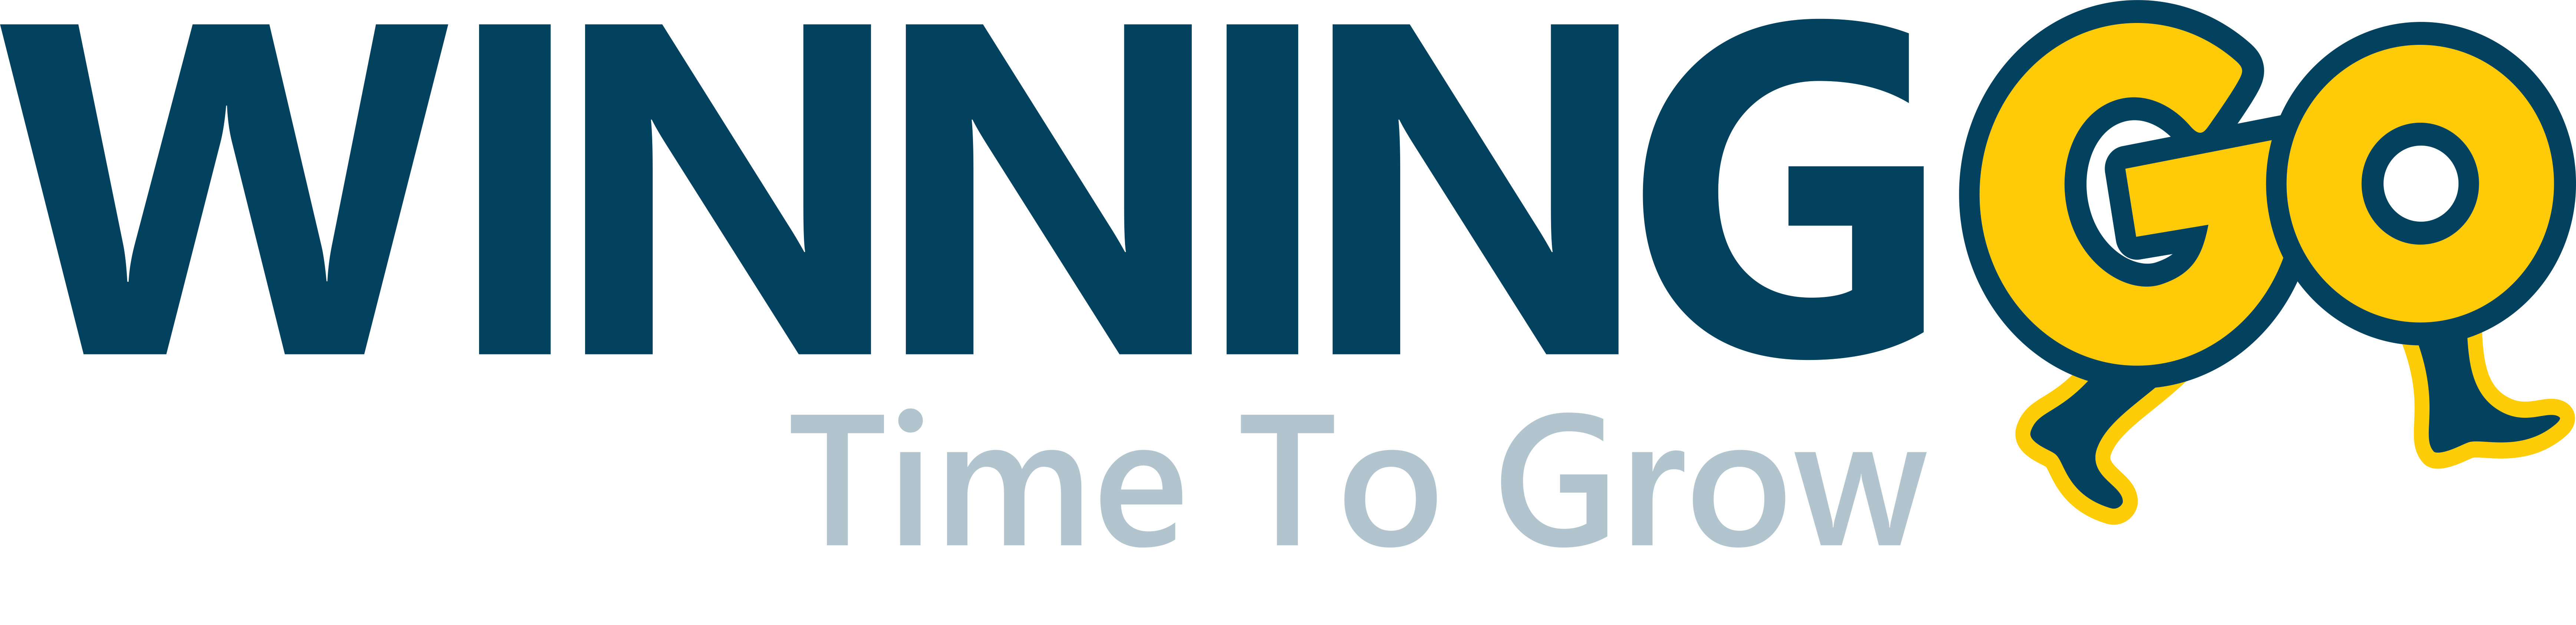 winninggo logo-png